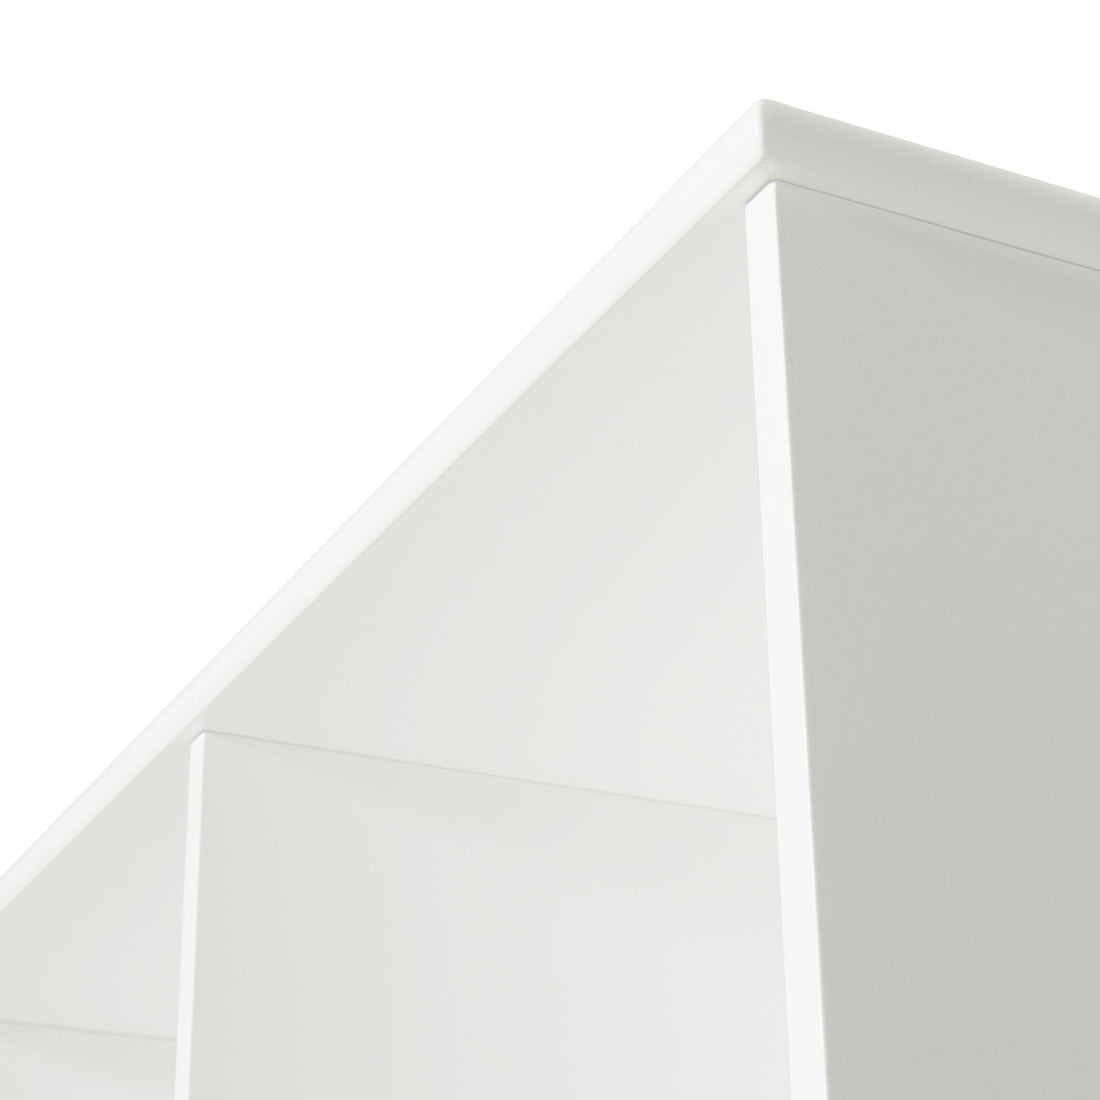 oliver-furniture-wood-shelving-unit-3x5-vertical-shelf-with-base- (6)